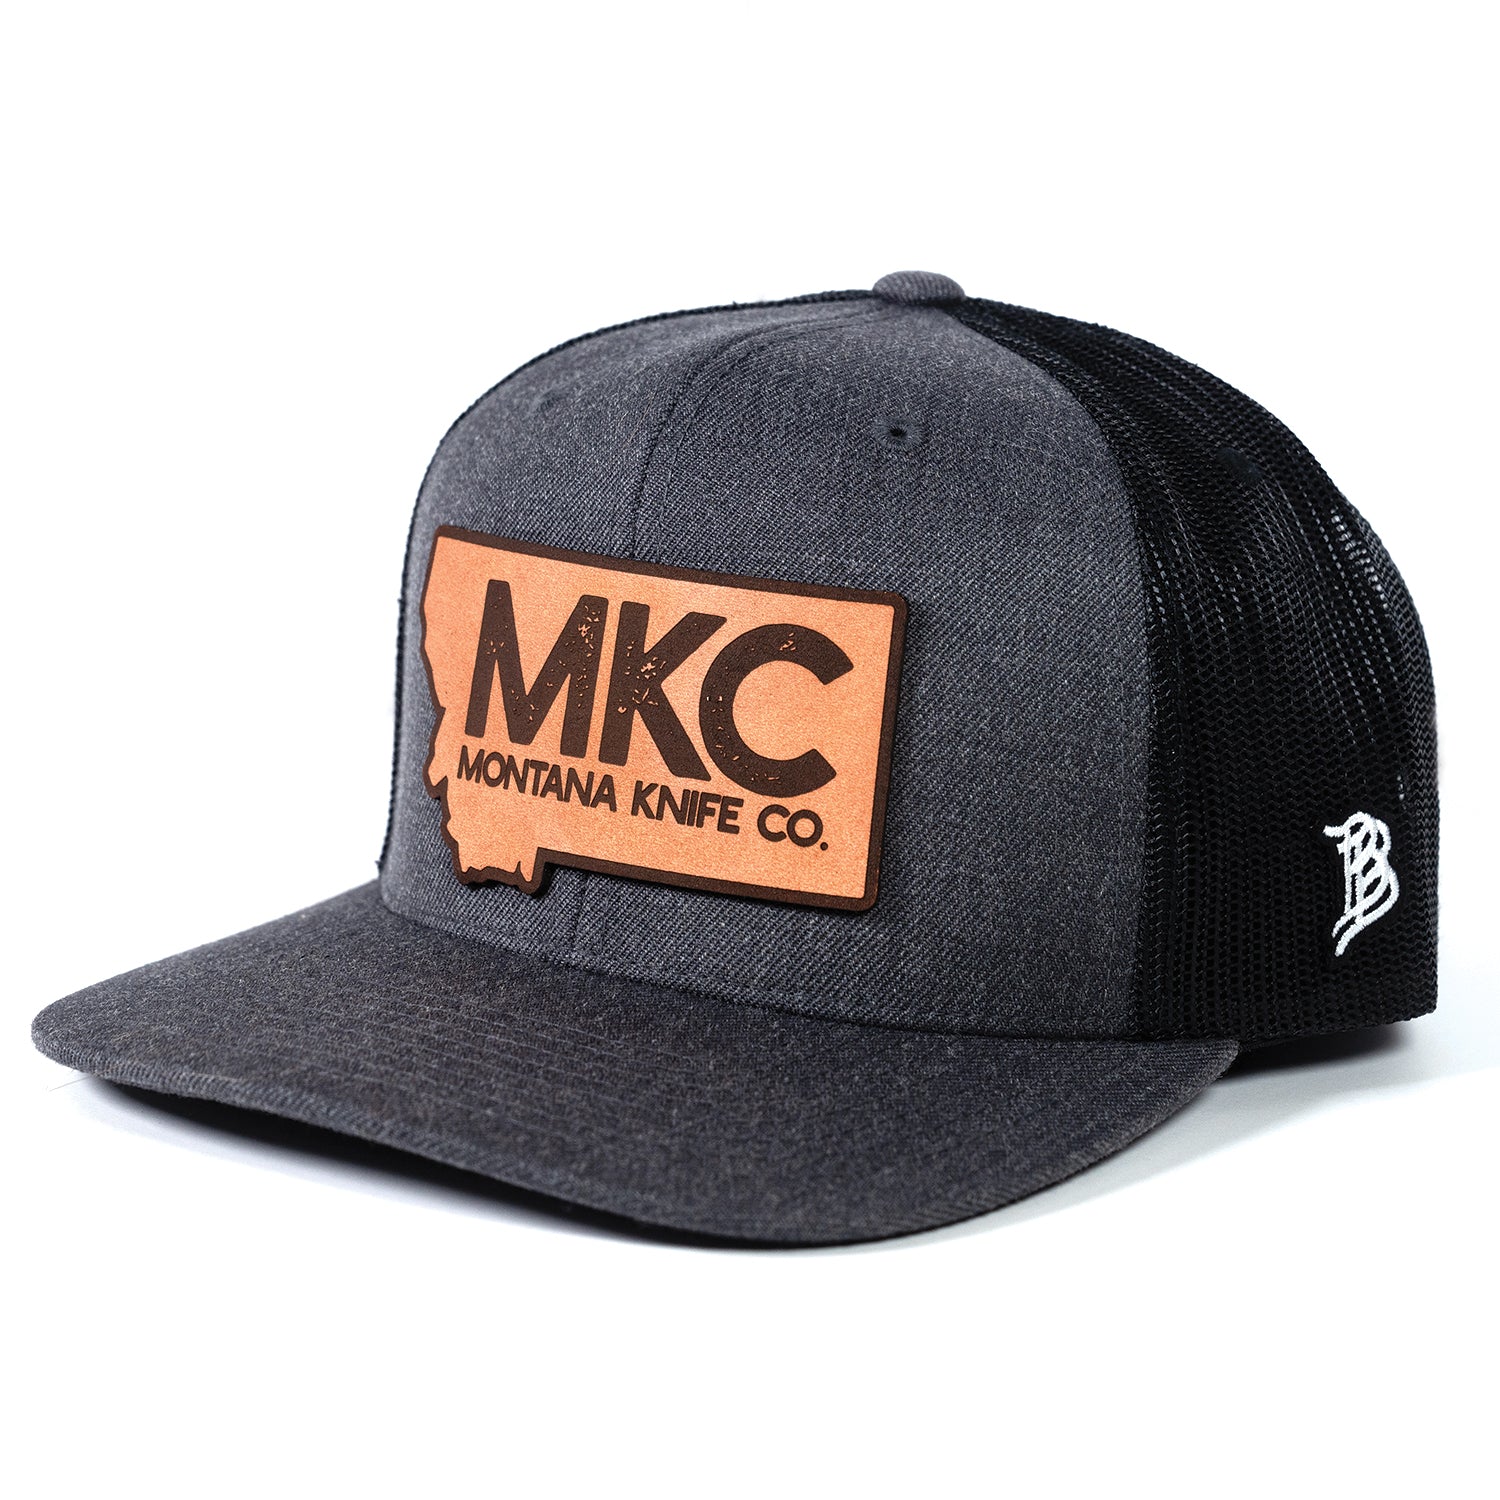 MKC STATE PATCH - GREY/BLACK TRUCKER SNAPBACK